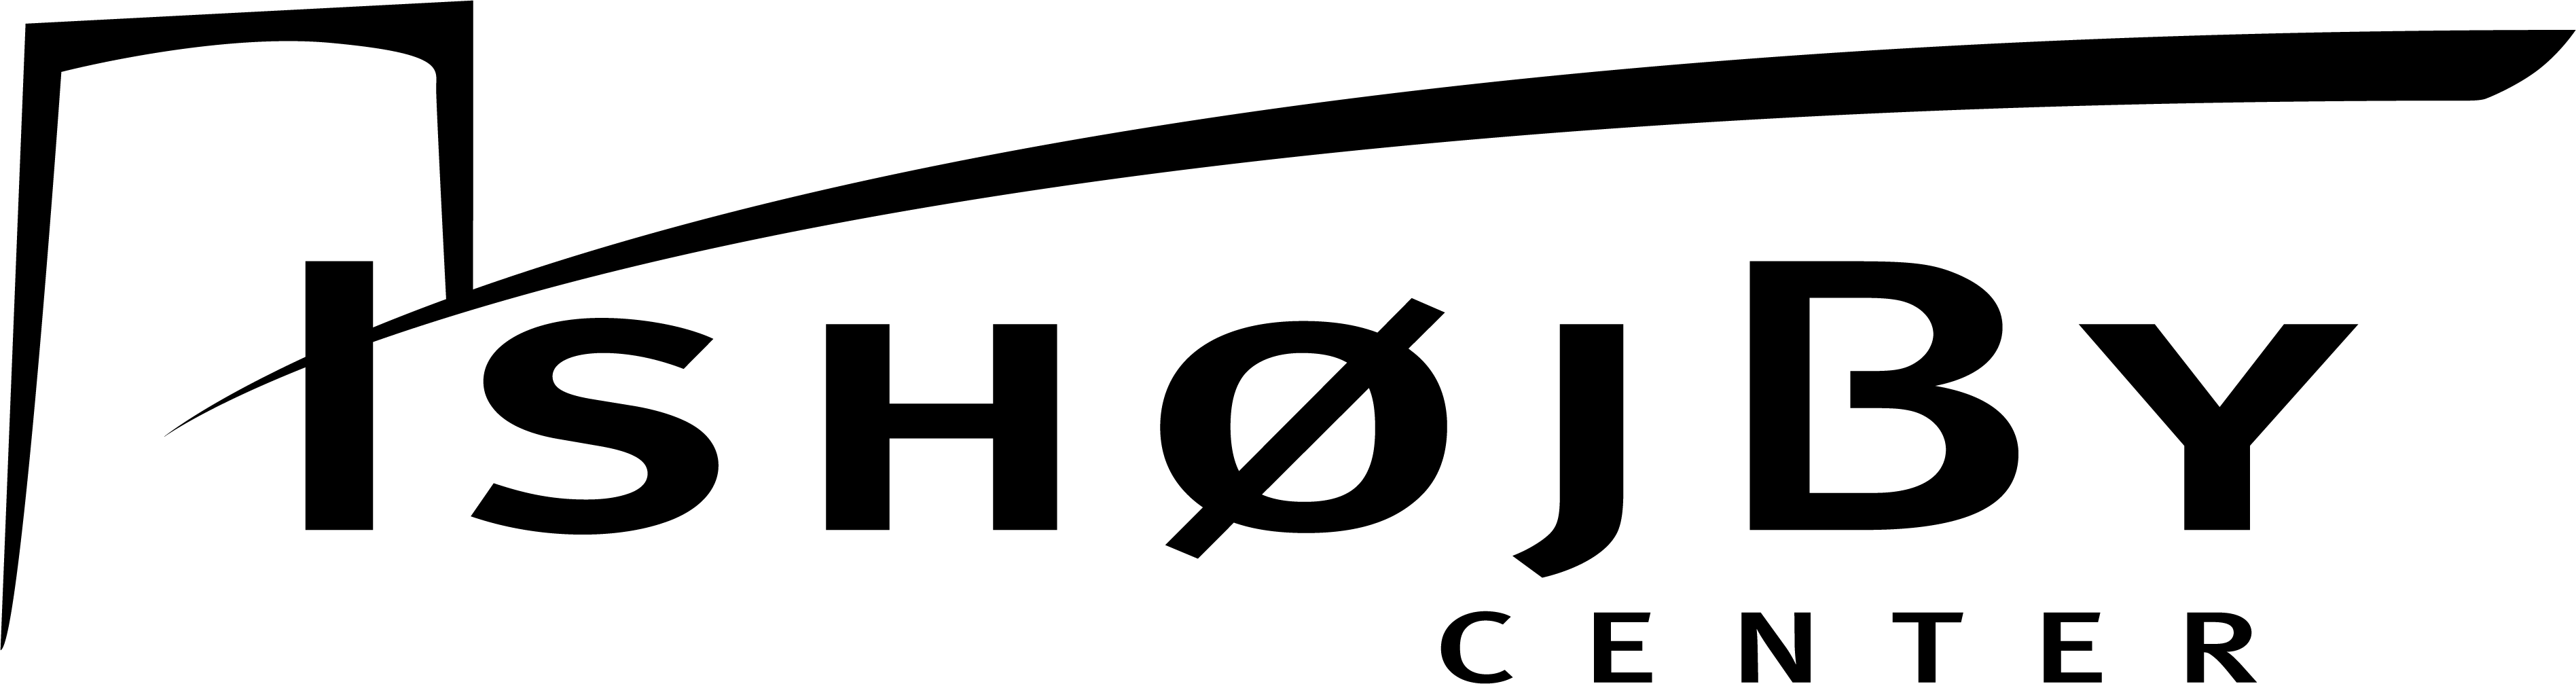 Ishøj by center logo